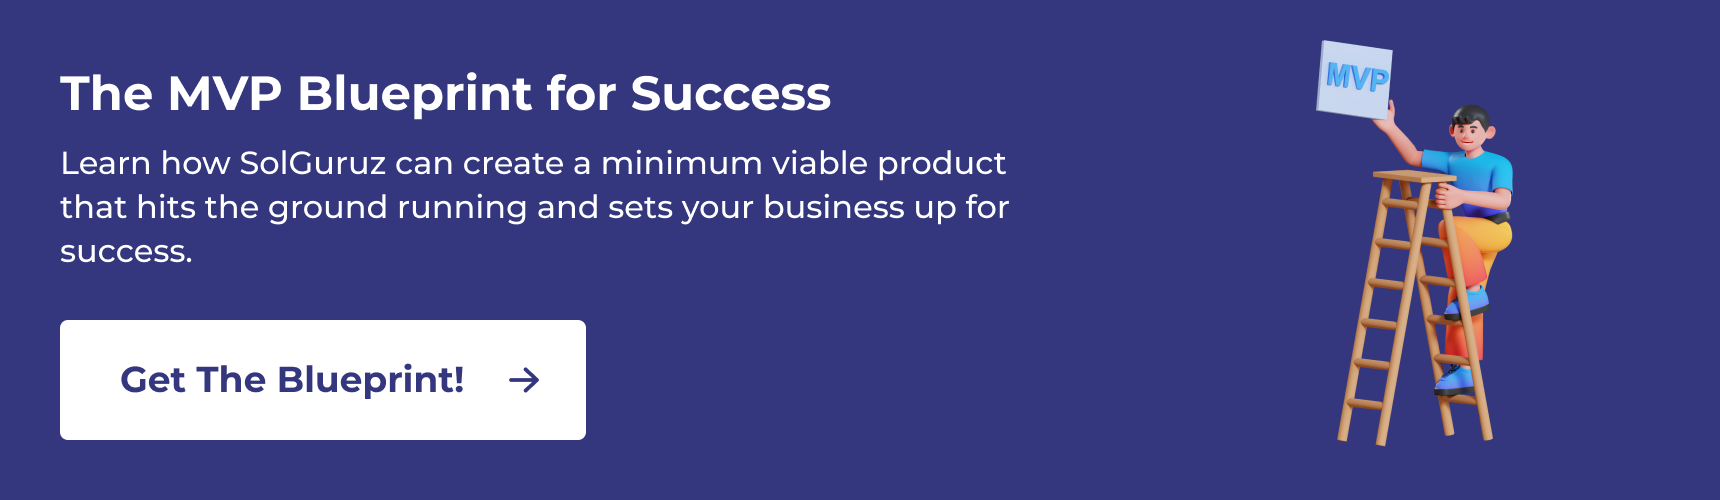 The Minimum Viable Product (MVP) Blueprint for Success